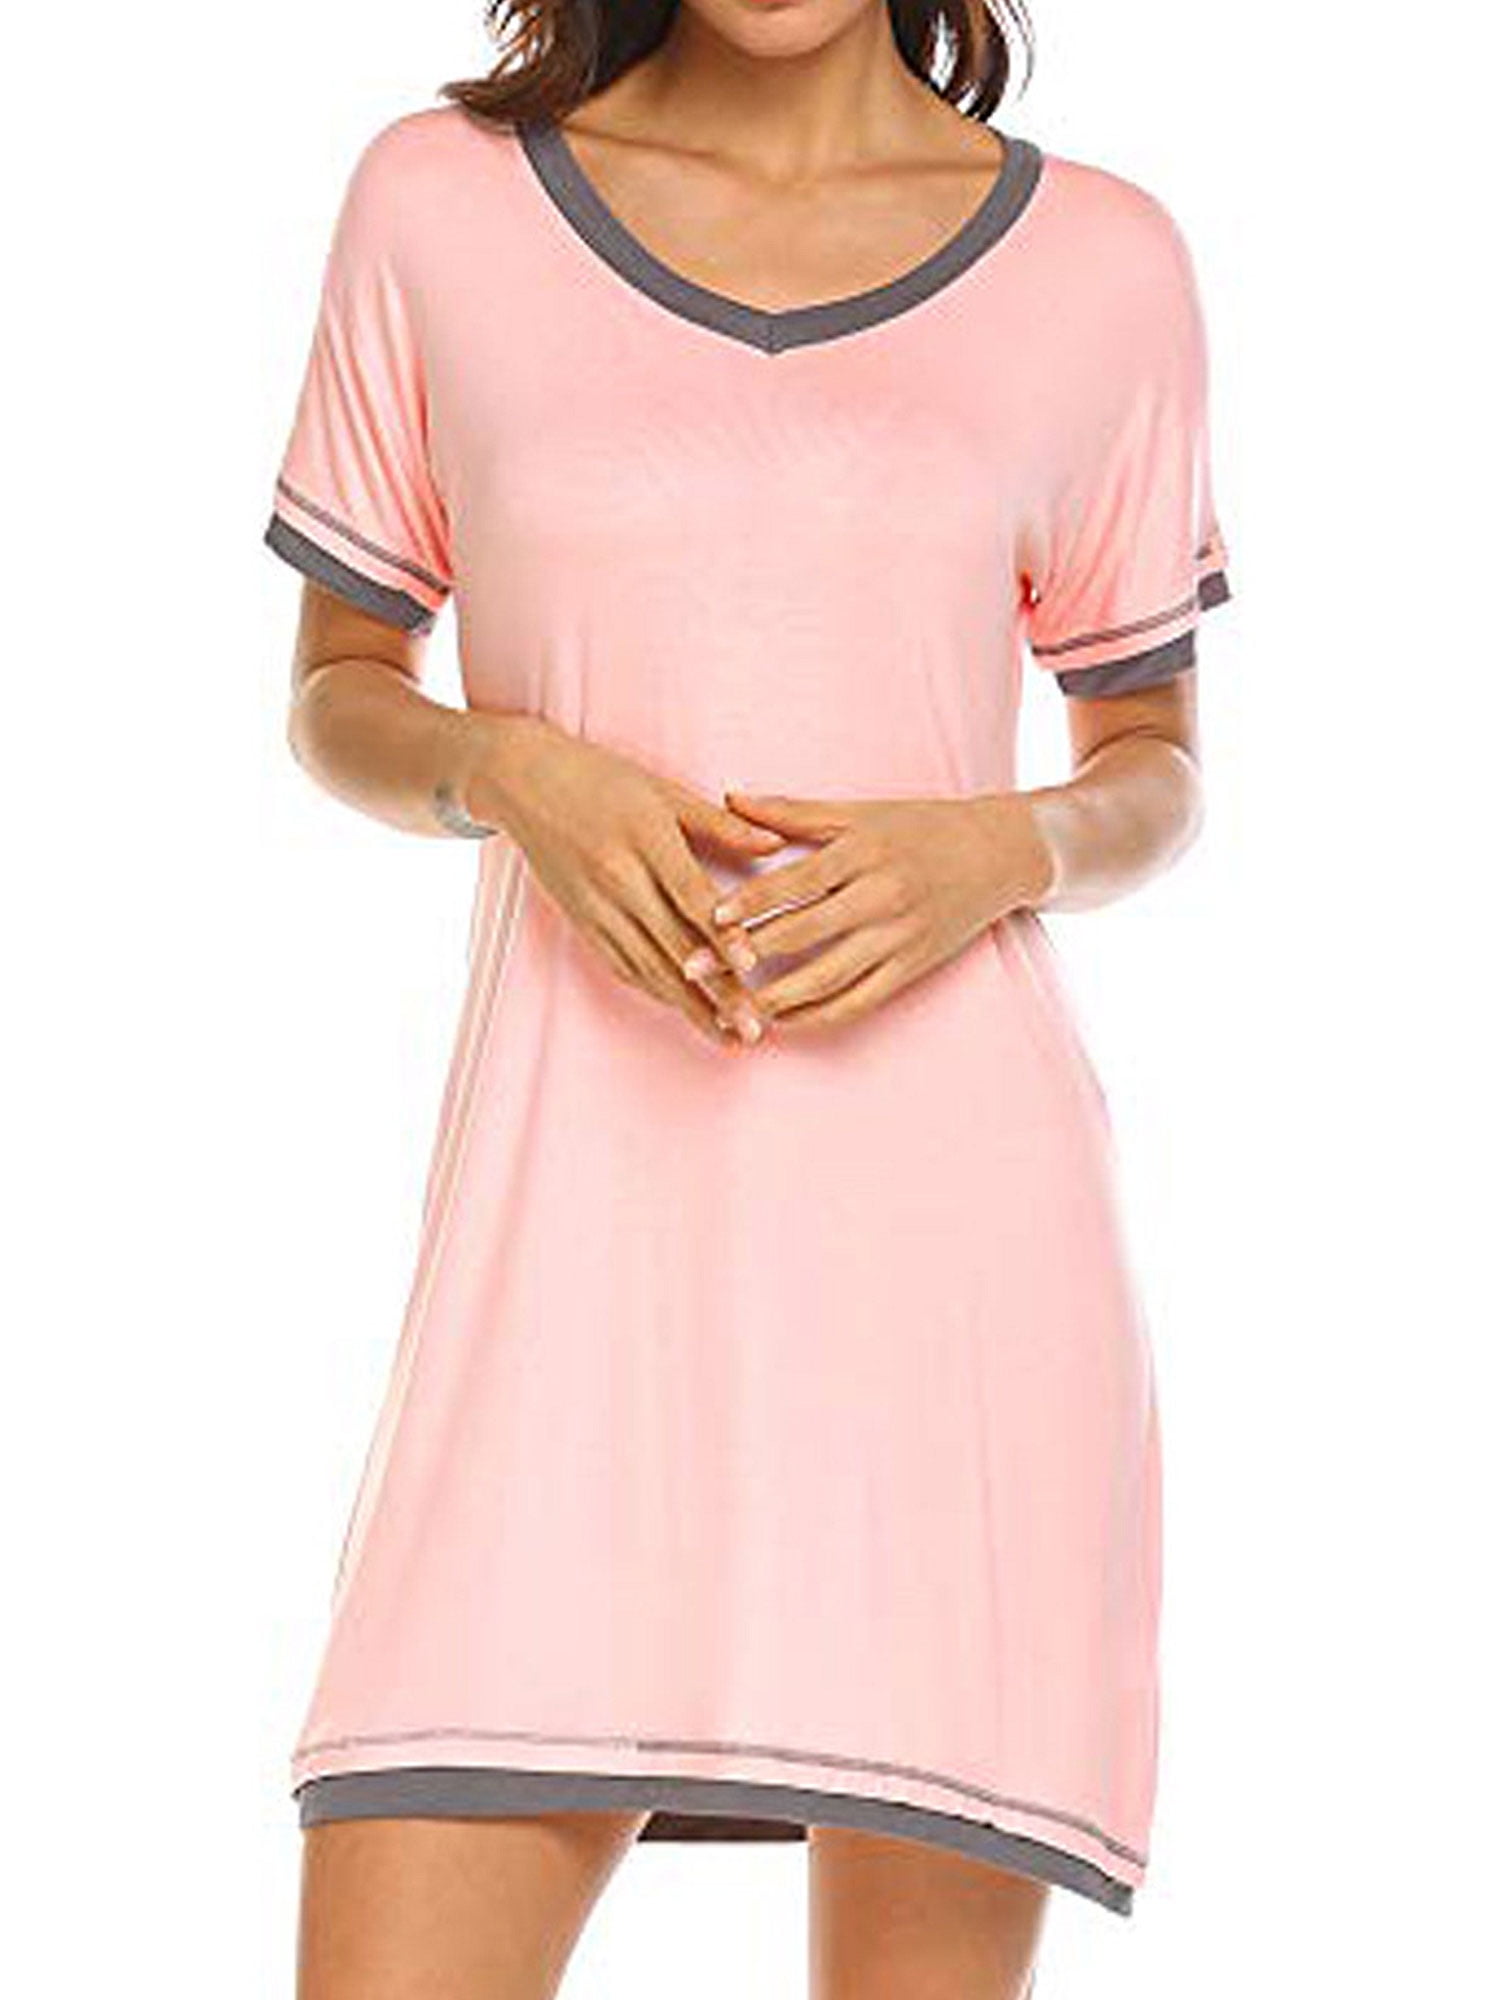 Women's Short Sleeve Oversize Sleep Shirt Nightgown 100% Cotton Nightshirt Dress 